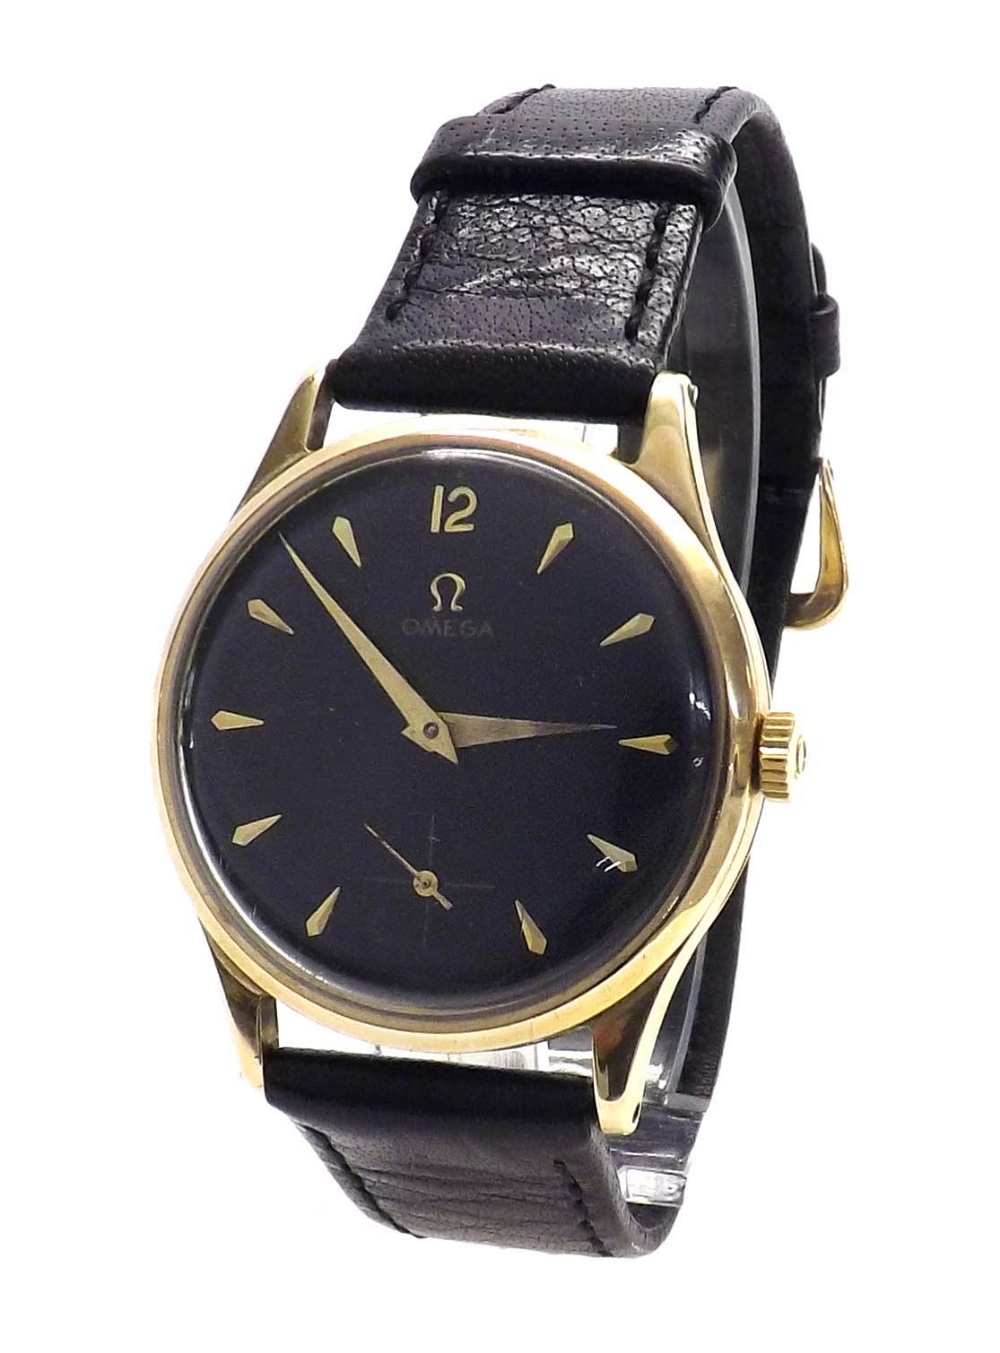 Omega 9ct gentleman's wristwatch, circa 1953, the black honeycomb dial with Arabic twelve, baton